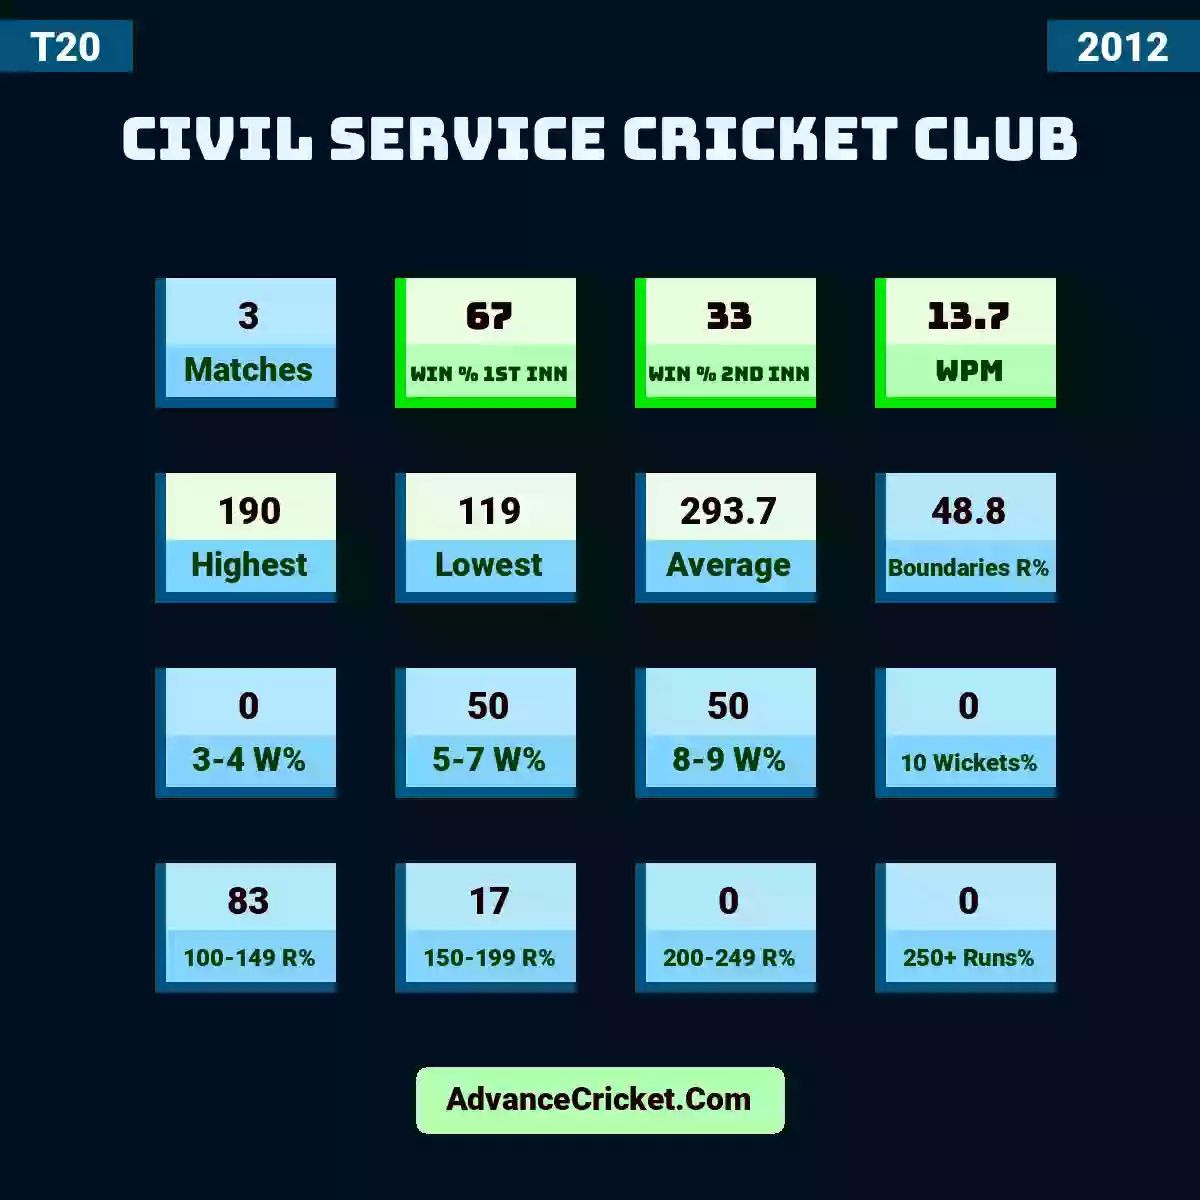 Image showing Civil Service Cricket Club with Matches: 3, Win % 1st Inn: 67, Win % 2nd Inn: 33, WPM: 13.7, Highest: 190, Lowest: 119, Average: 293.7, Boundaries R%: 48.8, 3-4 W%: 0, 5-7 W%: 50, 8-9 W%: 50, 10 Wickets%: 0, 100-149 R%: 83, 150-199 R%: 17, 200-249 R%: 0, 250+ Runs%: 0.